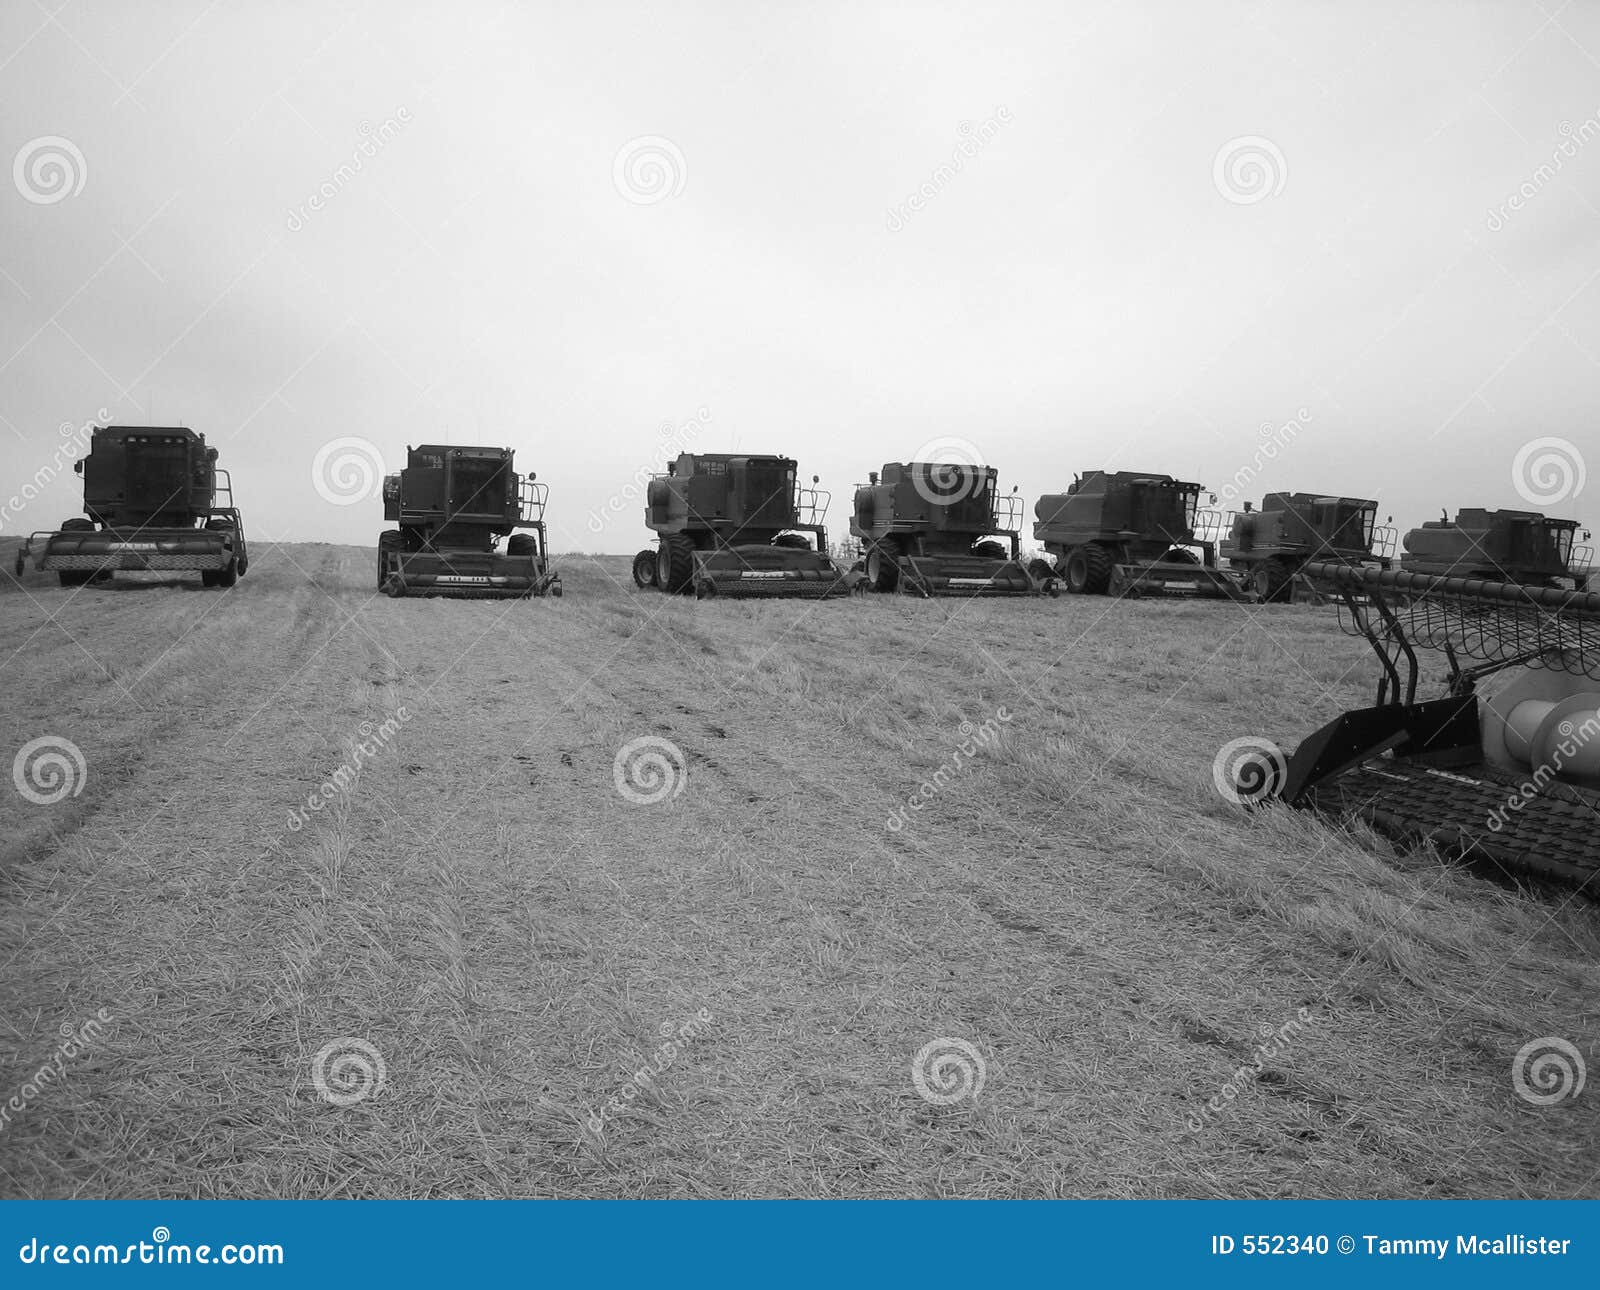 convoy of tractors